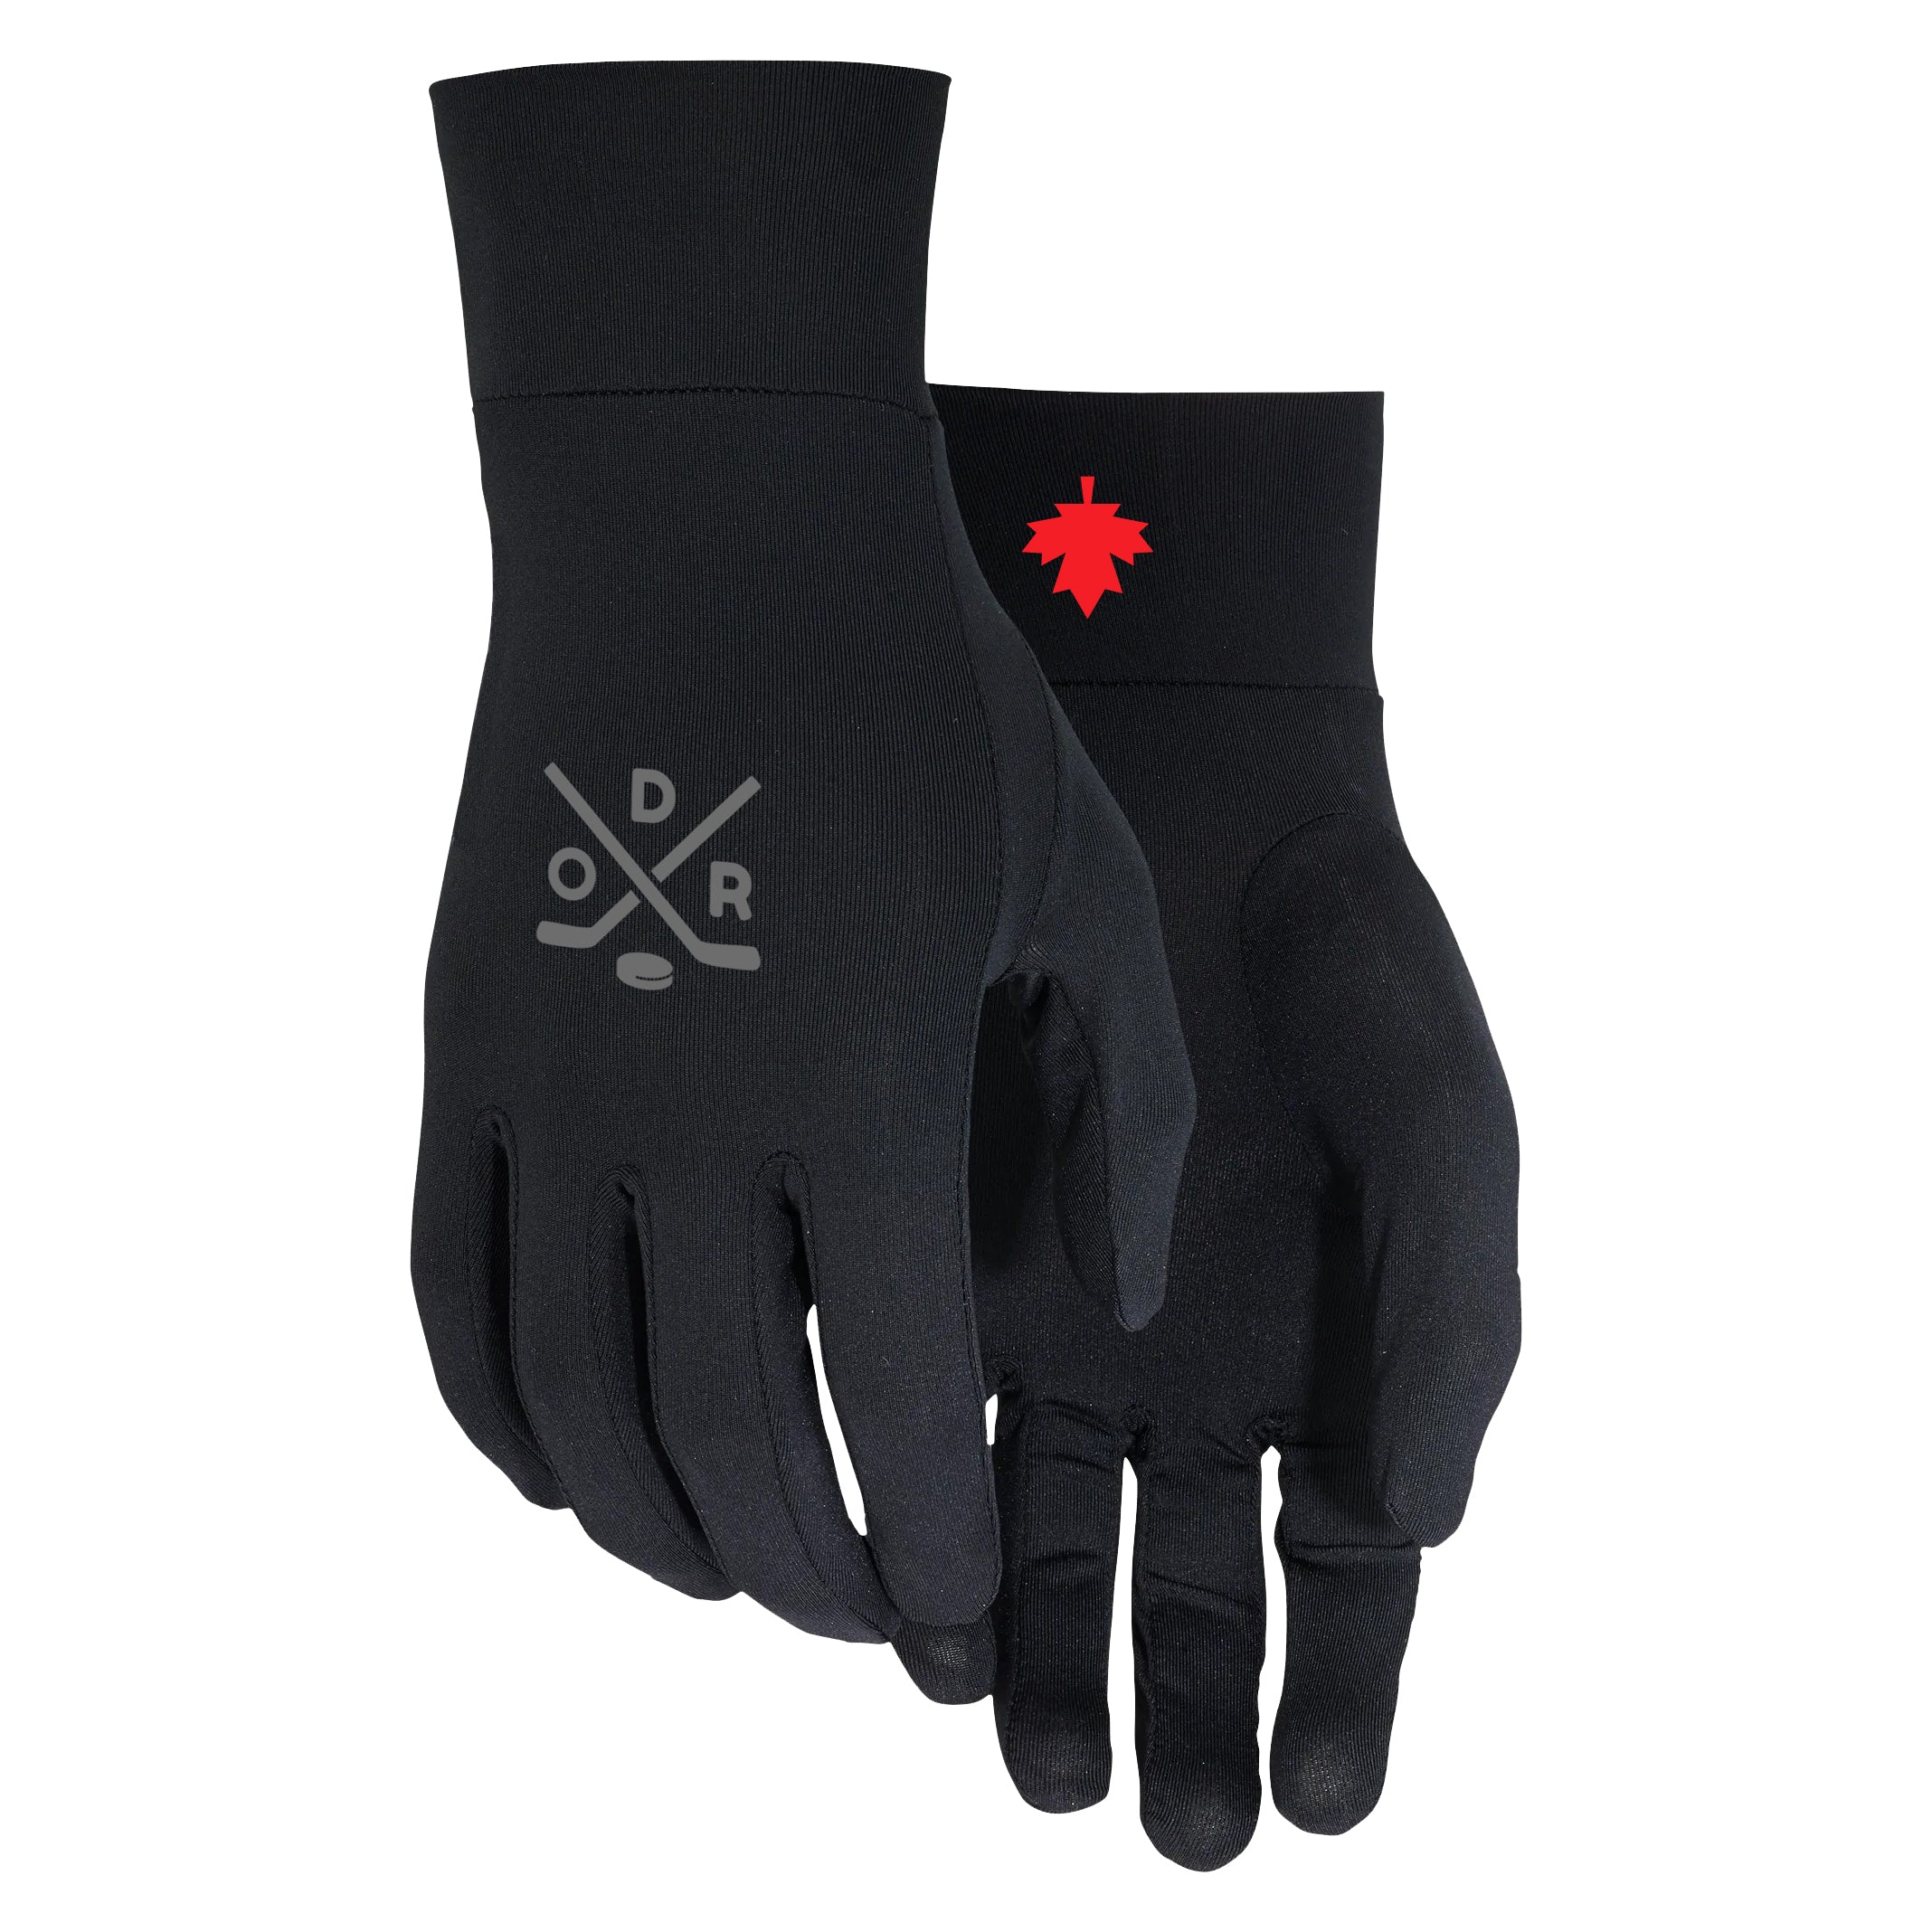 Noru Full Heat Glove Liner - 7413-2105-04 in Black, Size S